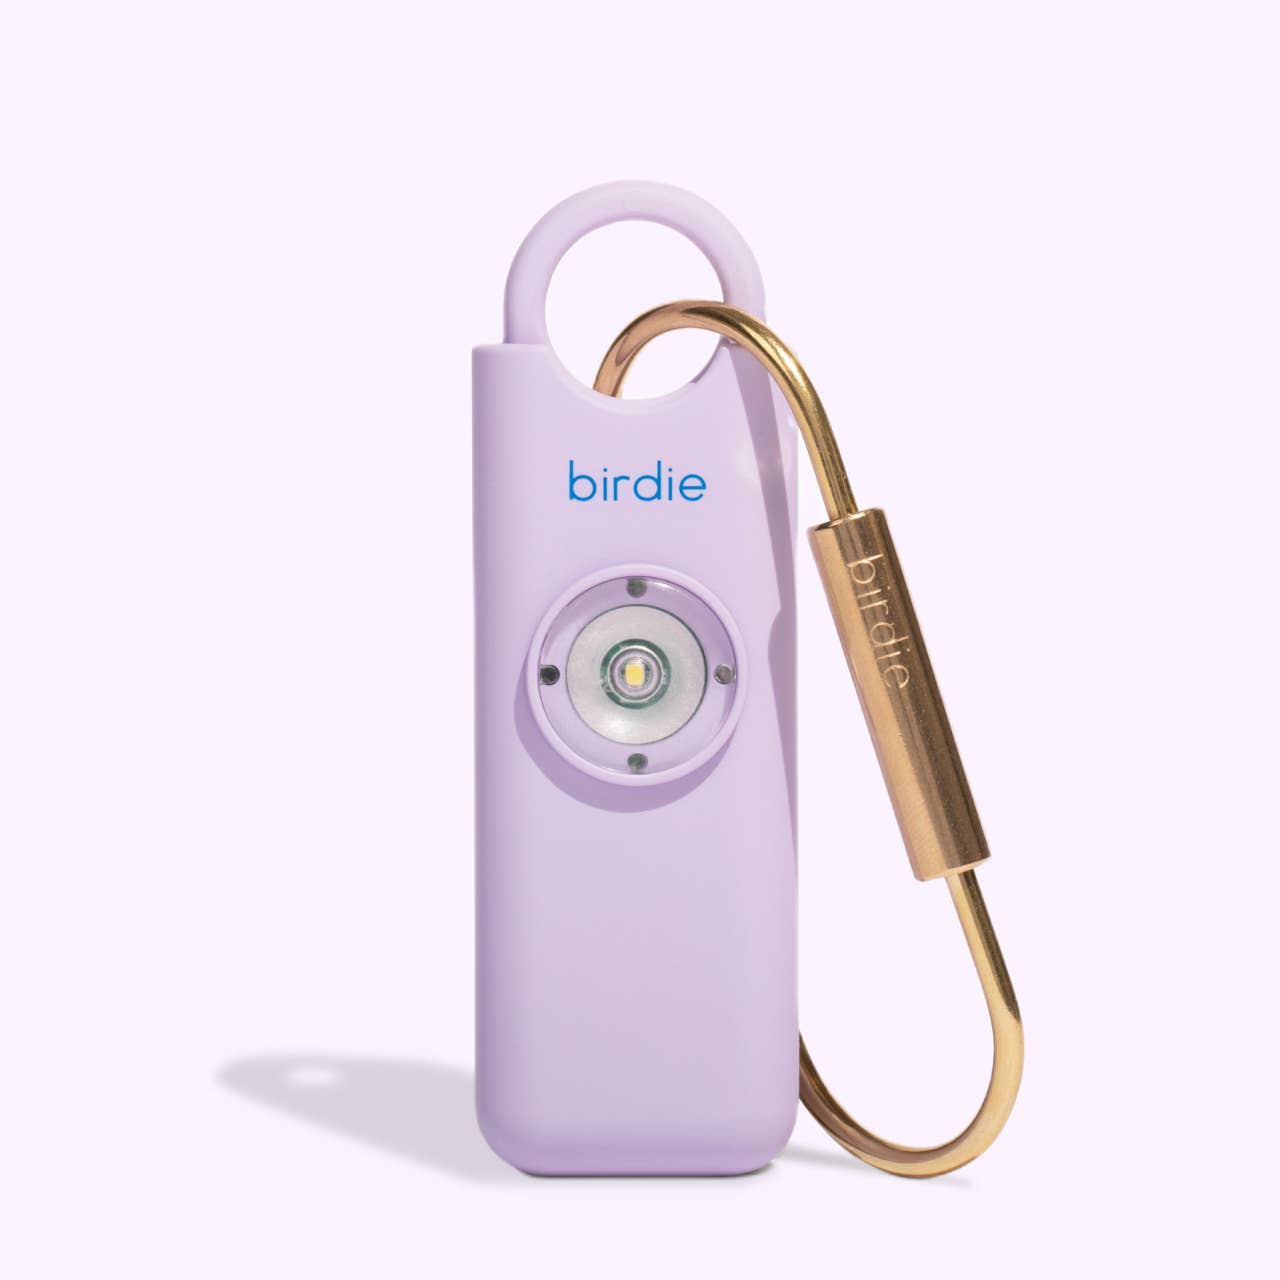 She's Birdie - She's Birdie Personal Safety Alarm: Single / Coconut